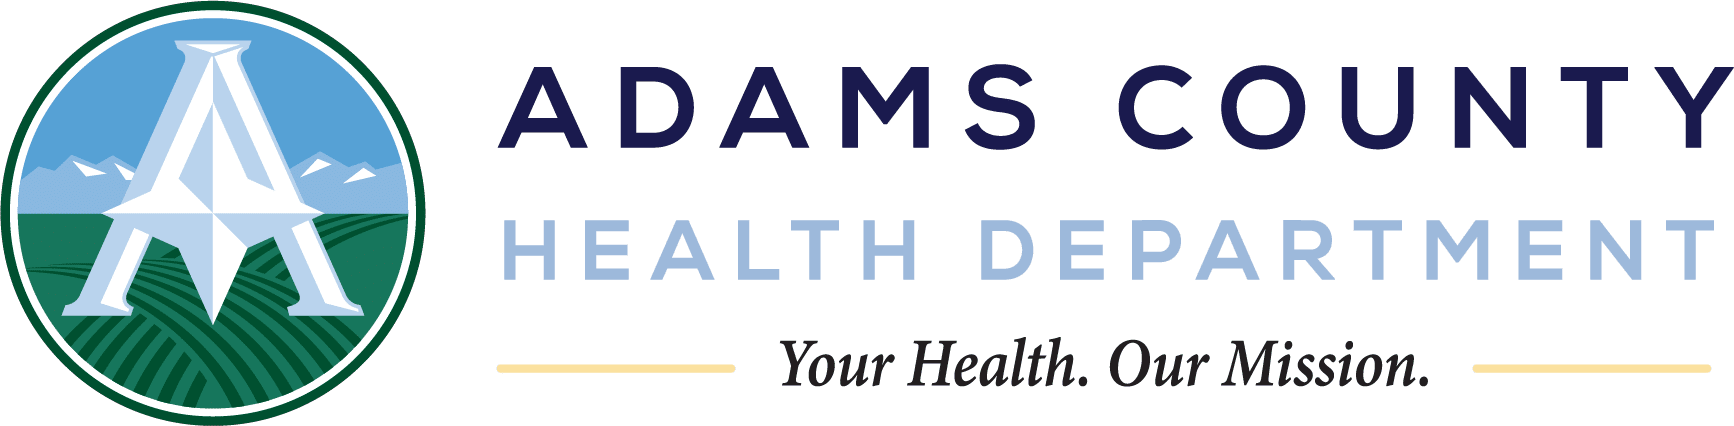 Adams County Health Department Logo_color_vert (2)